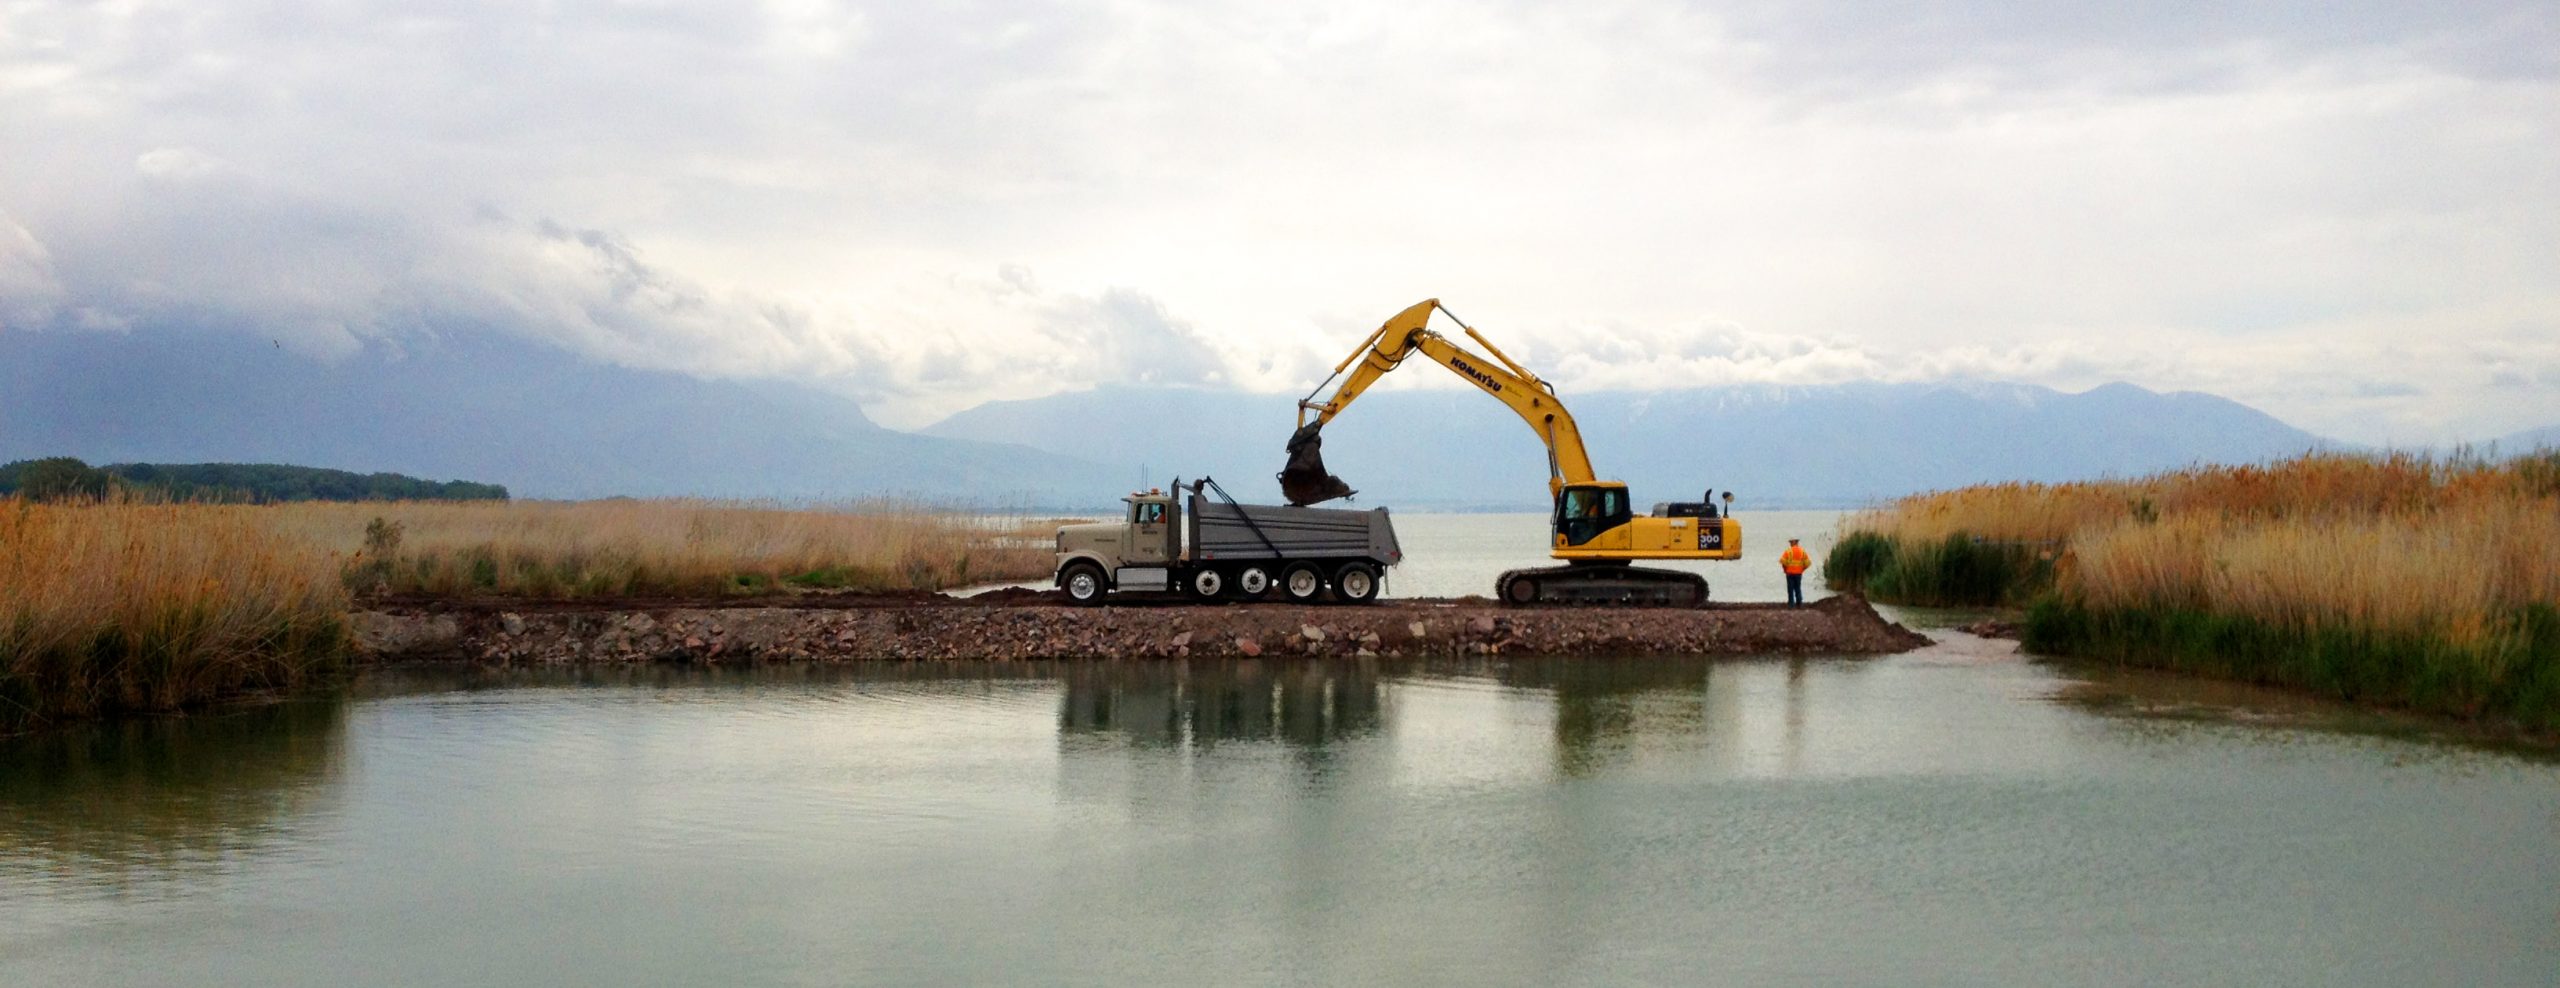 Historic Utah Lake Pump Station Project